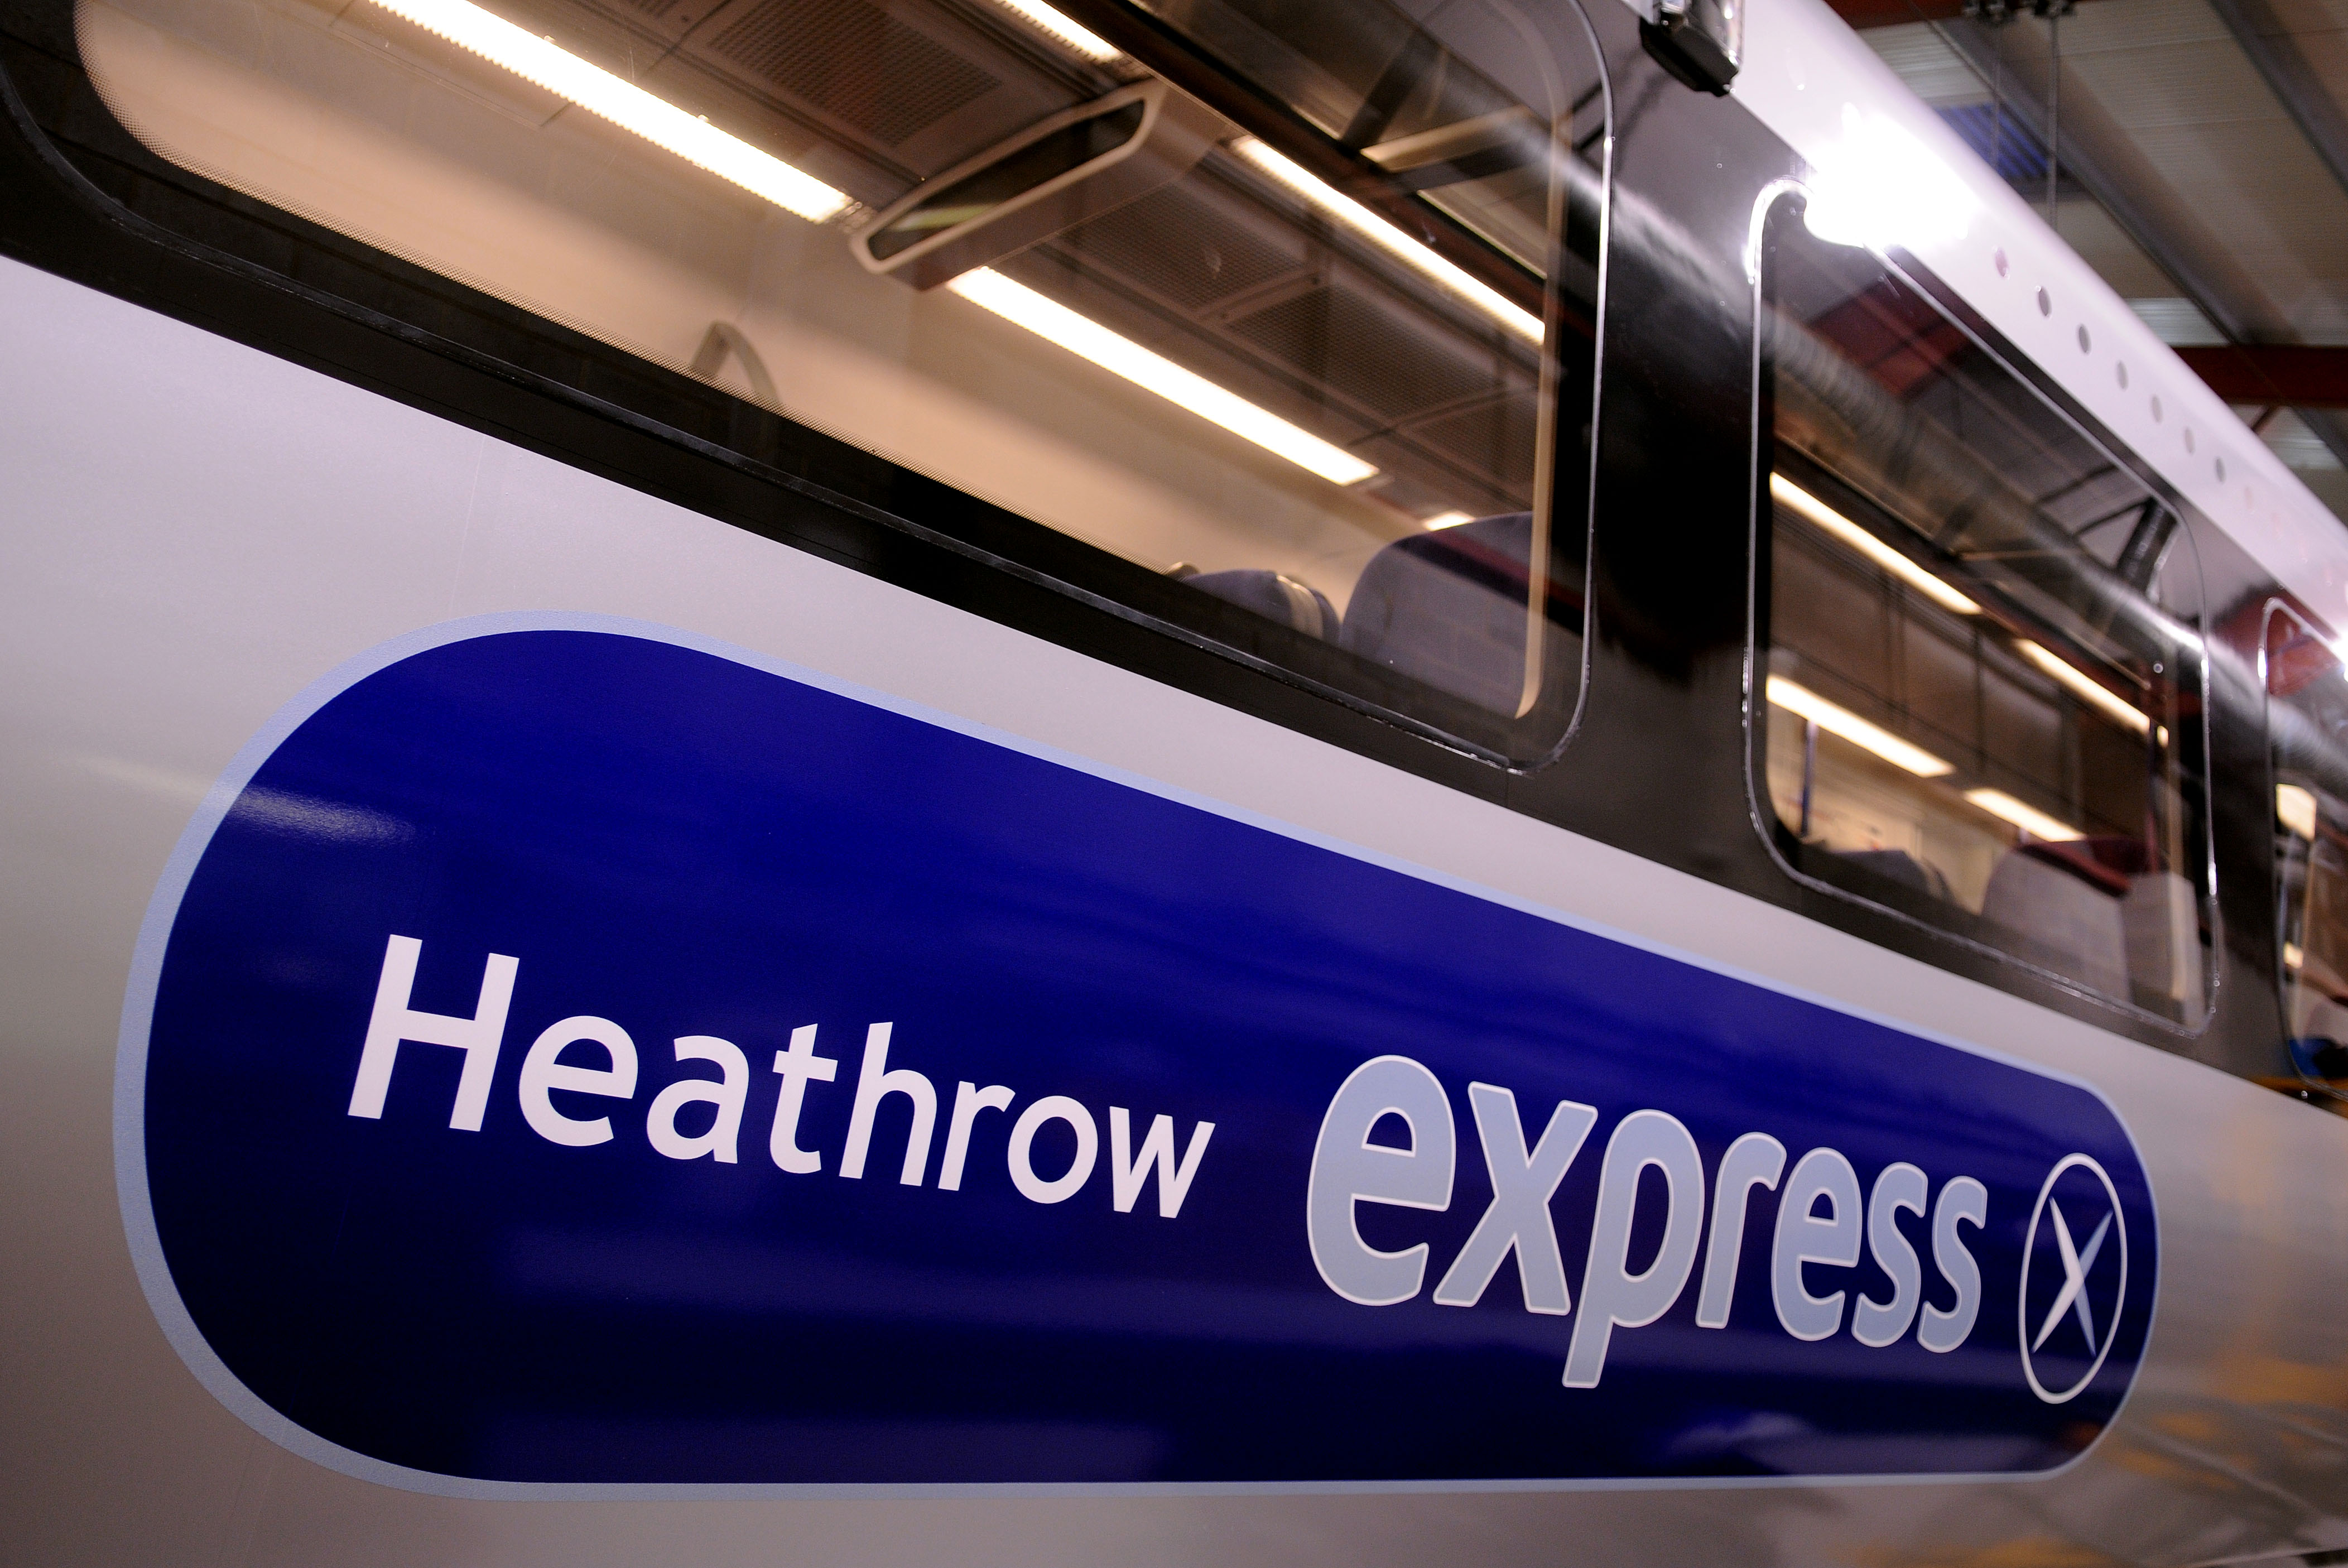 Heathrow Express website